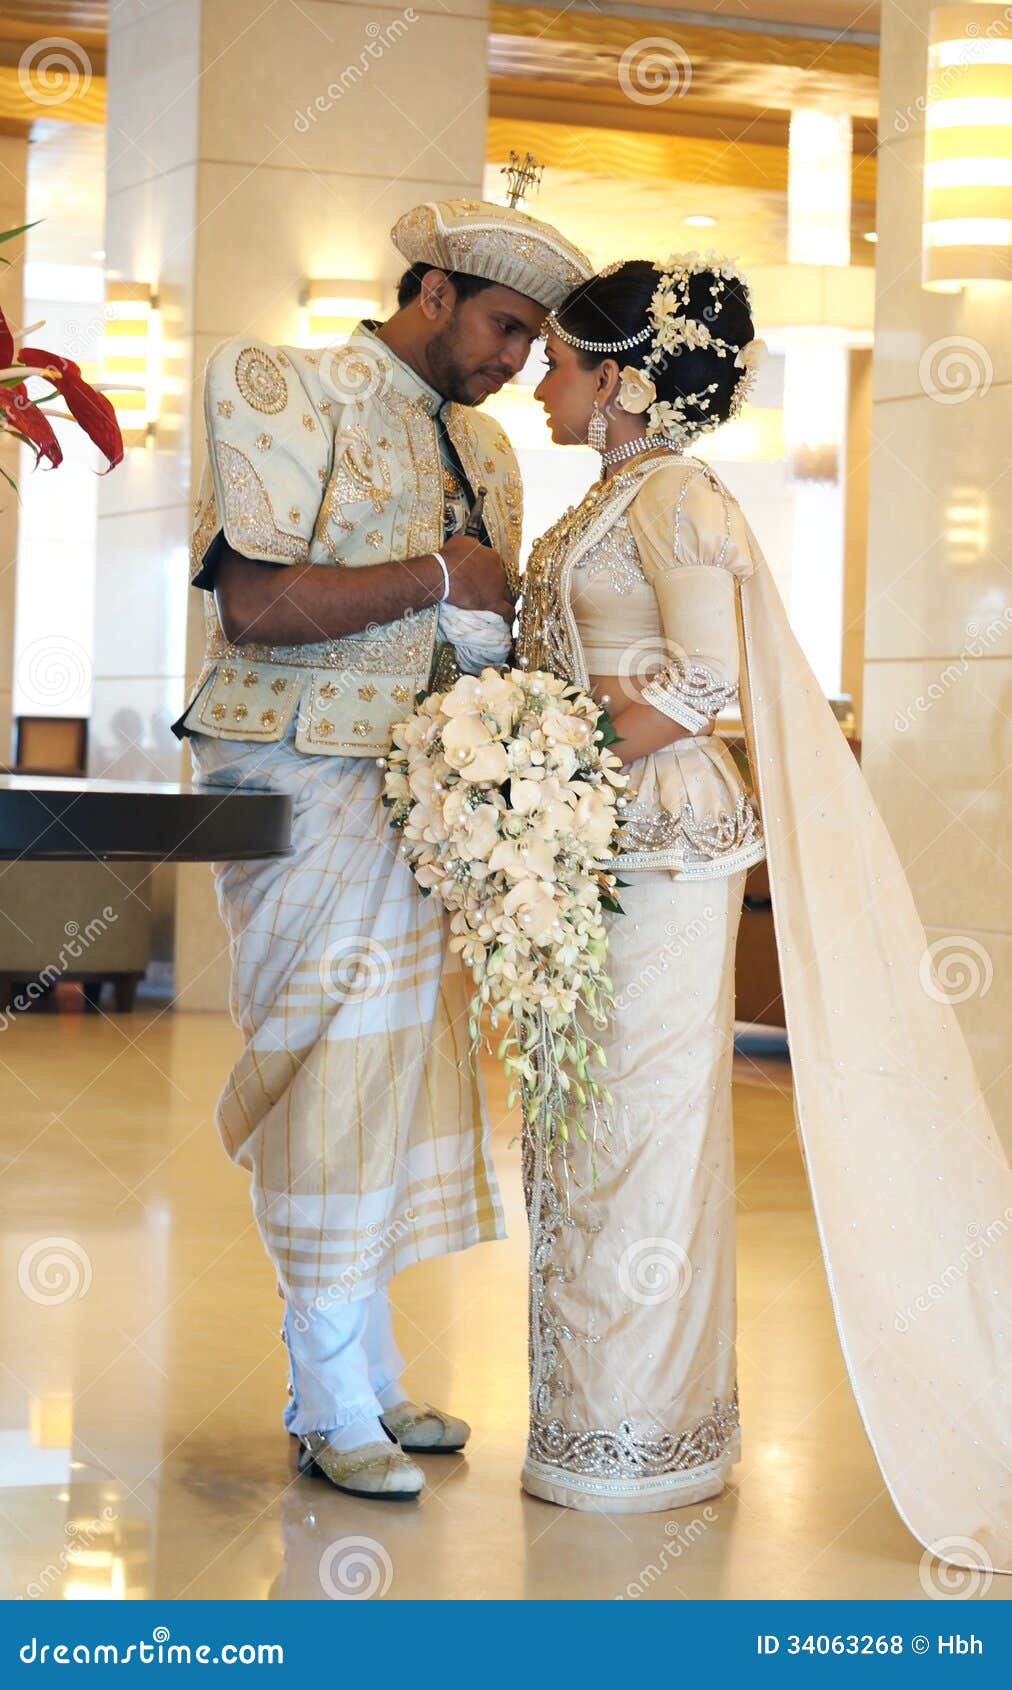 bride-groom-sri-lanka-dressed-traditional-lankan-wedding-dress-34063268.jpg